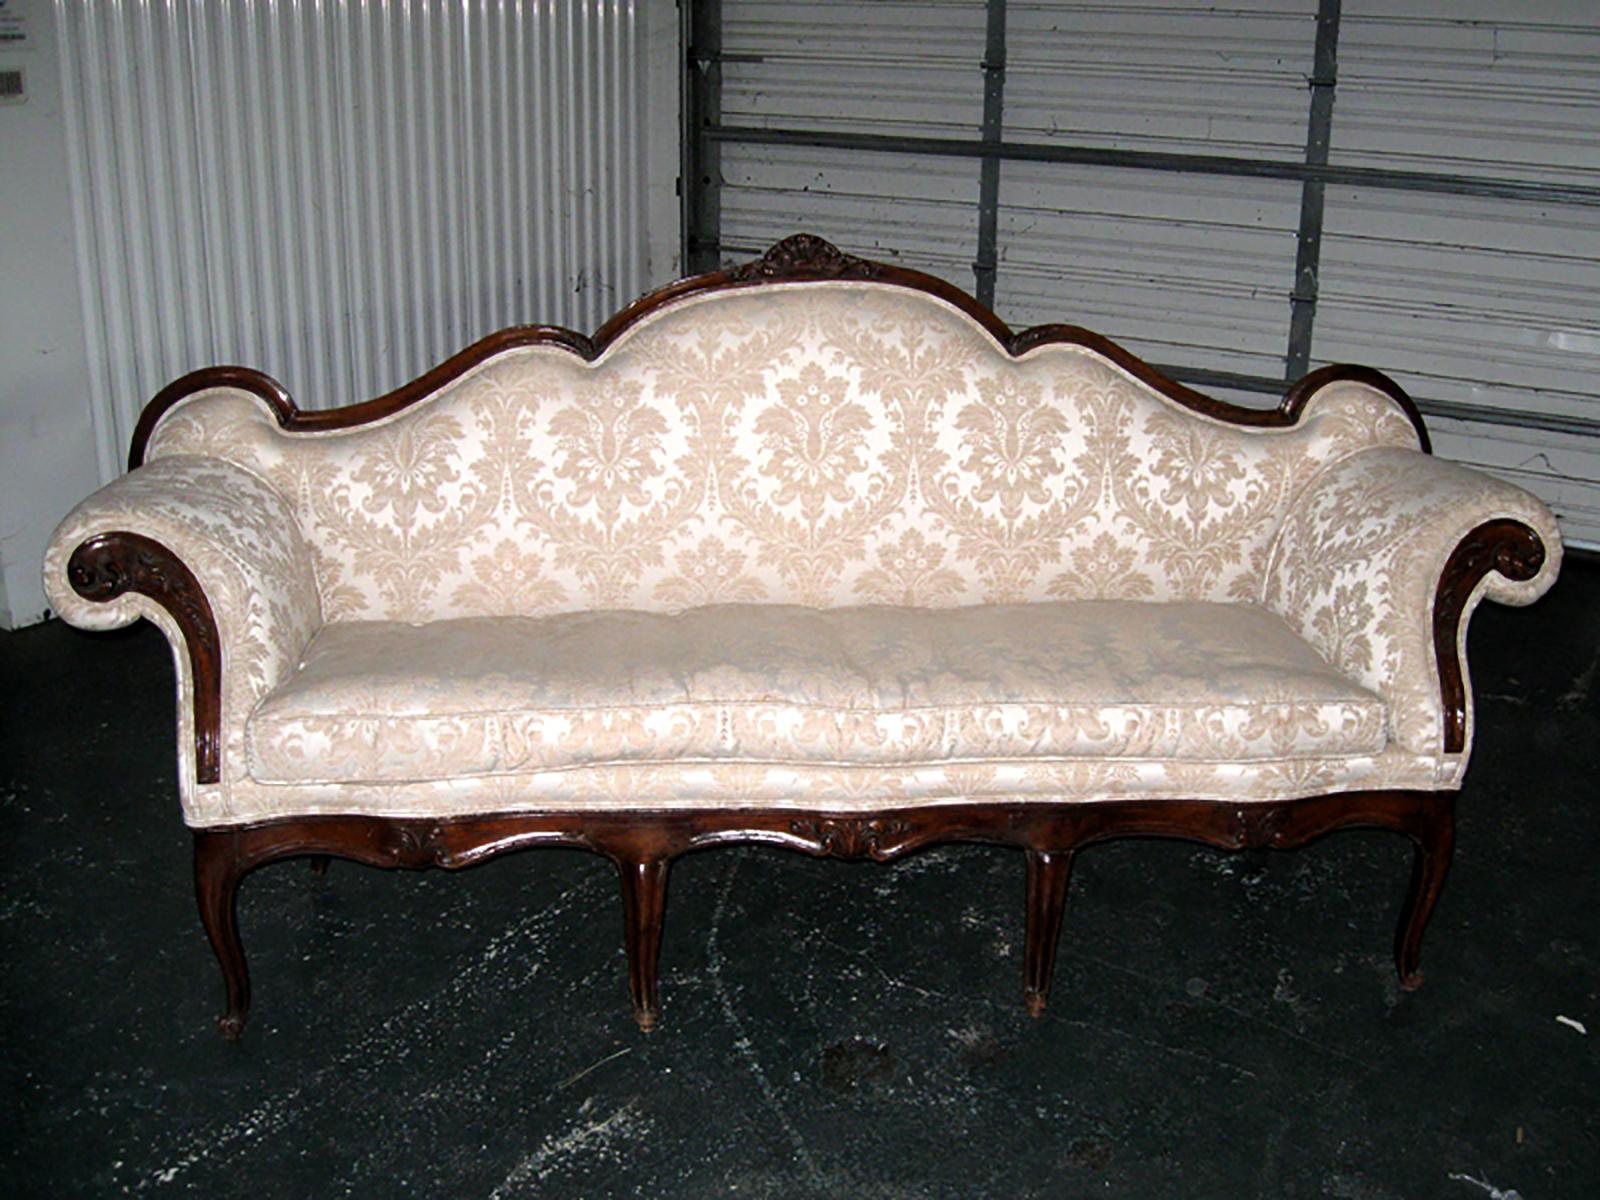 19th century Italian Venetian style upholstered settee / canape